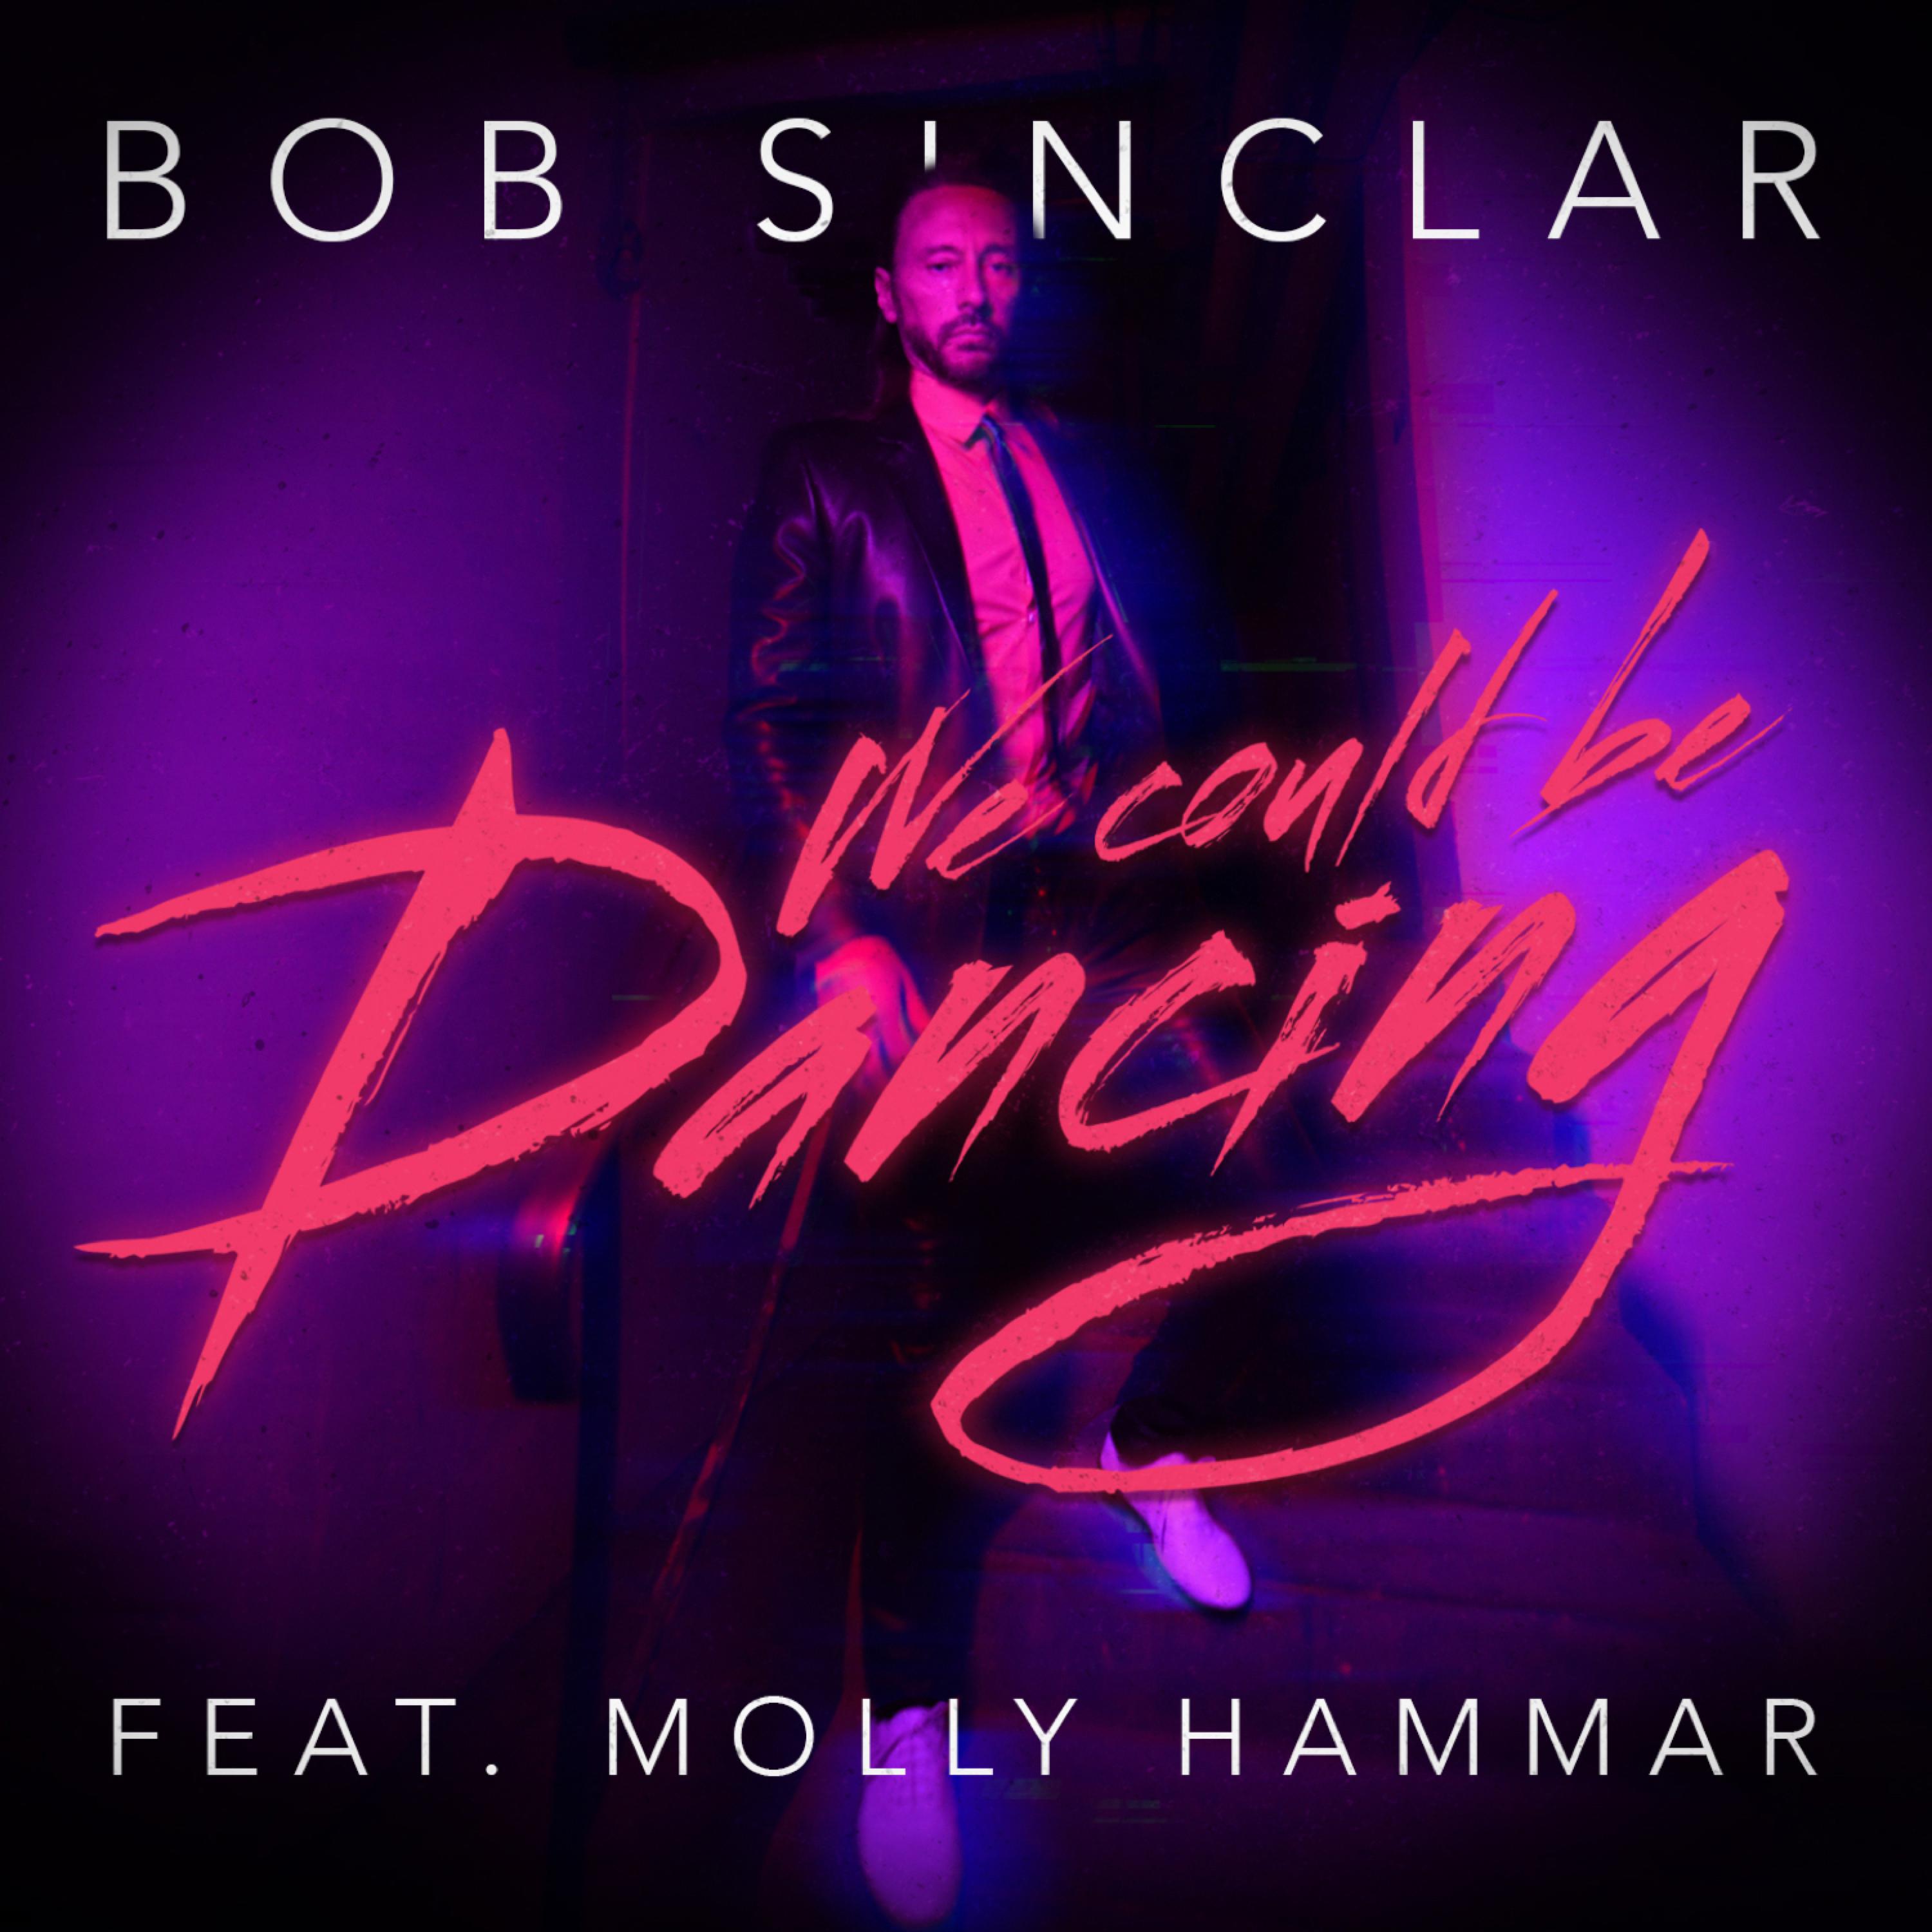 We Could Be Dancing歌词 歌手Bob Sinclar / Molly Hammar-专辑We Could Be Dancing-单曲《We Could Be Dancing》LRC歌词下载